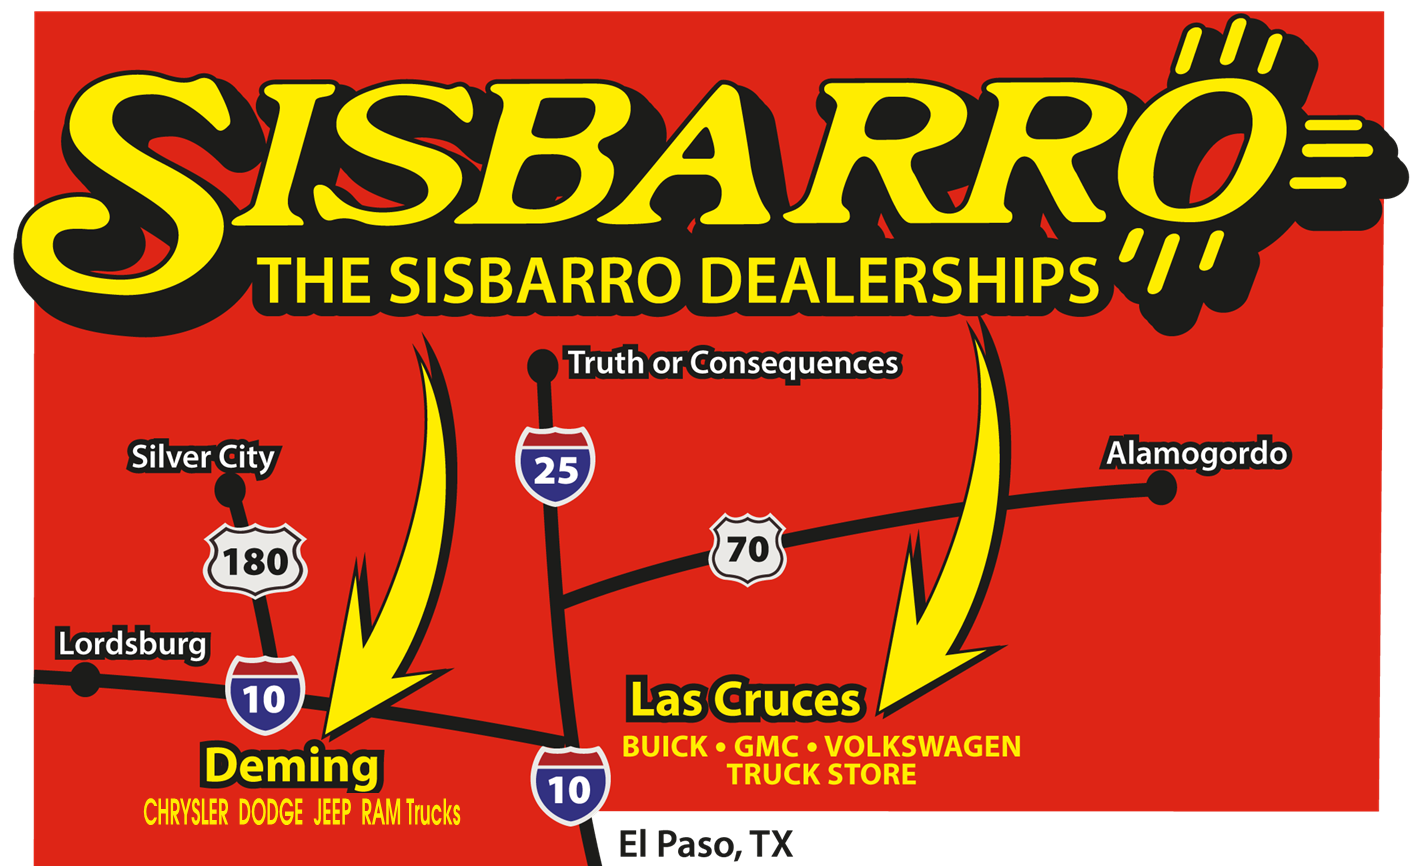 The Sisbarro Dealerships in Las Cruces NM